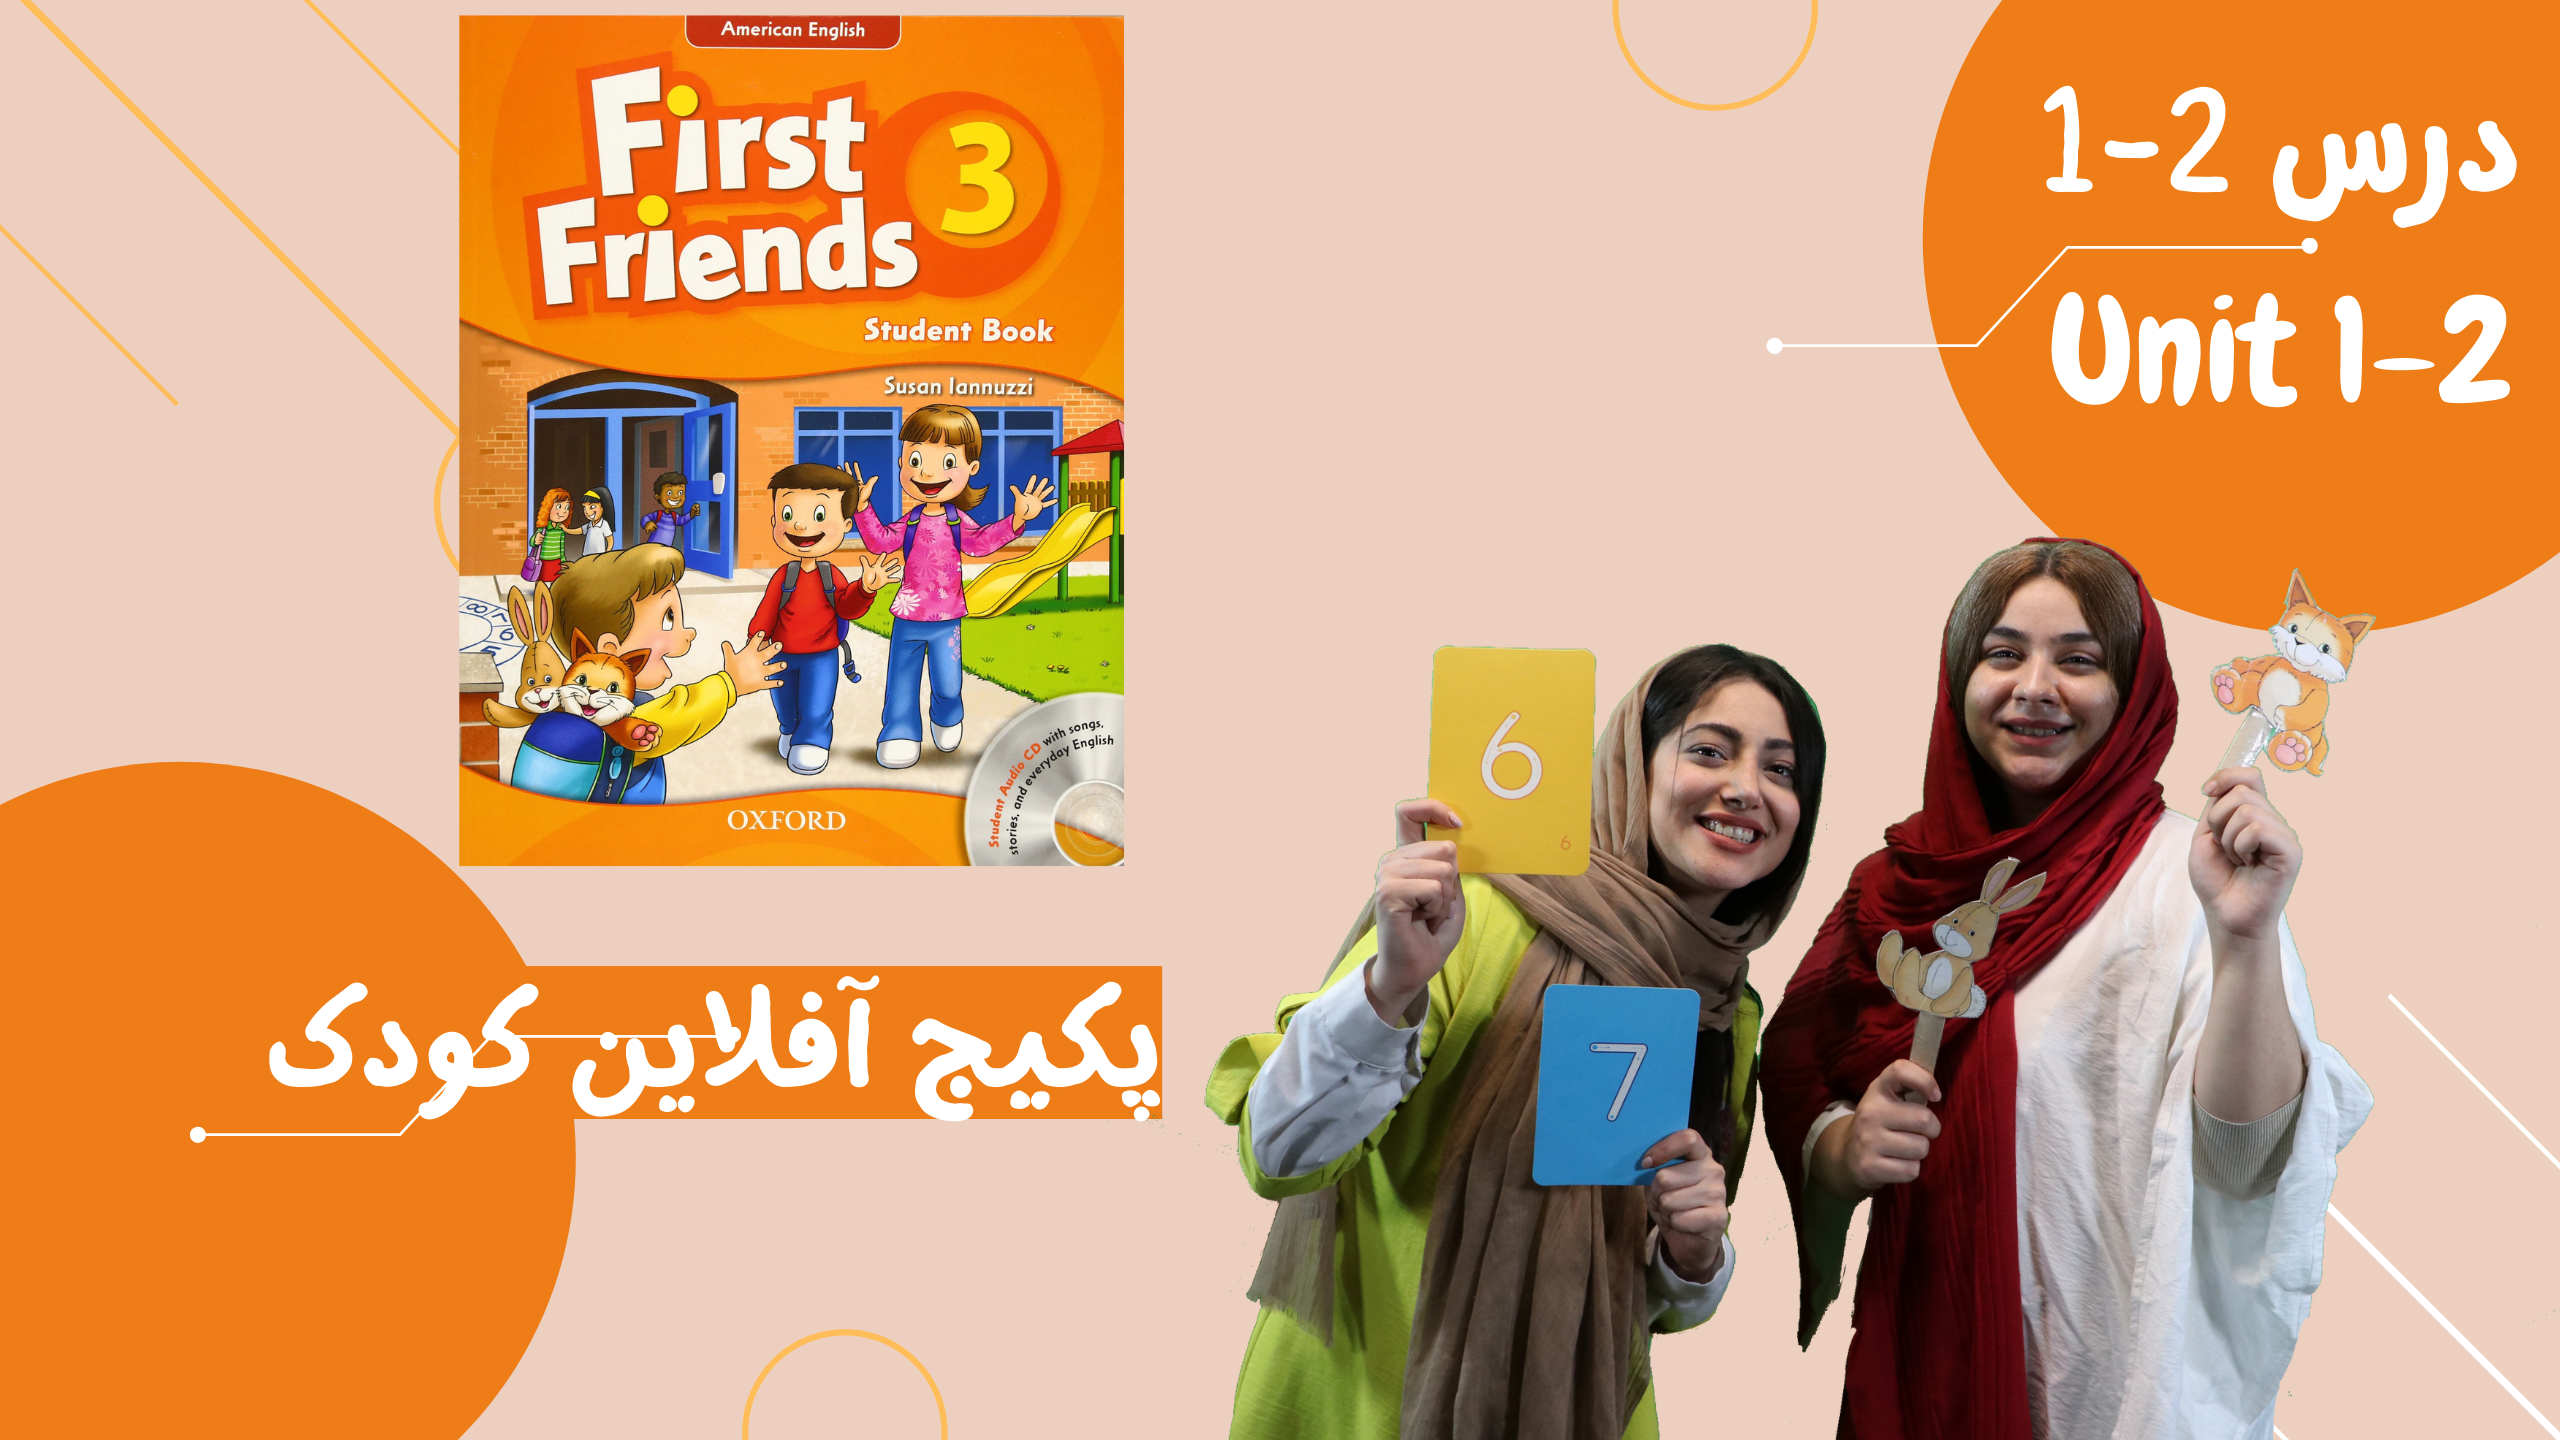 offlineclass-firstfriends3 unit1/2/کلاس آفلاین فرست فرندز3 دروس 1/2